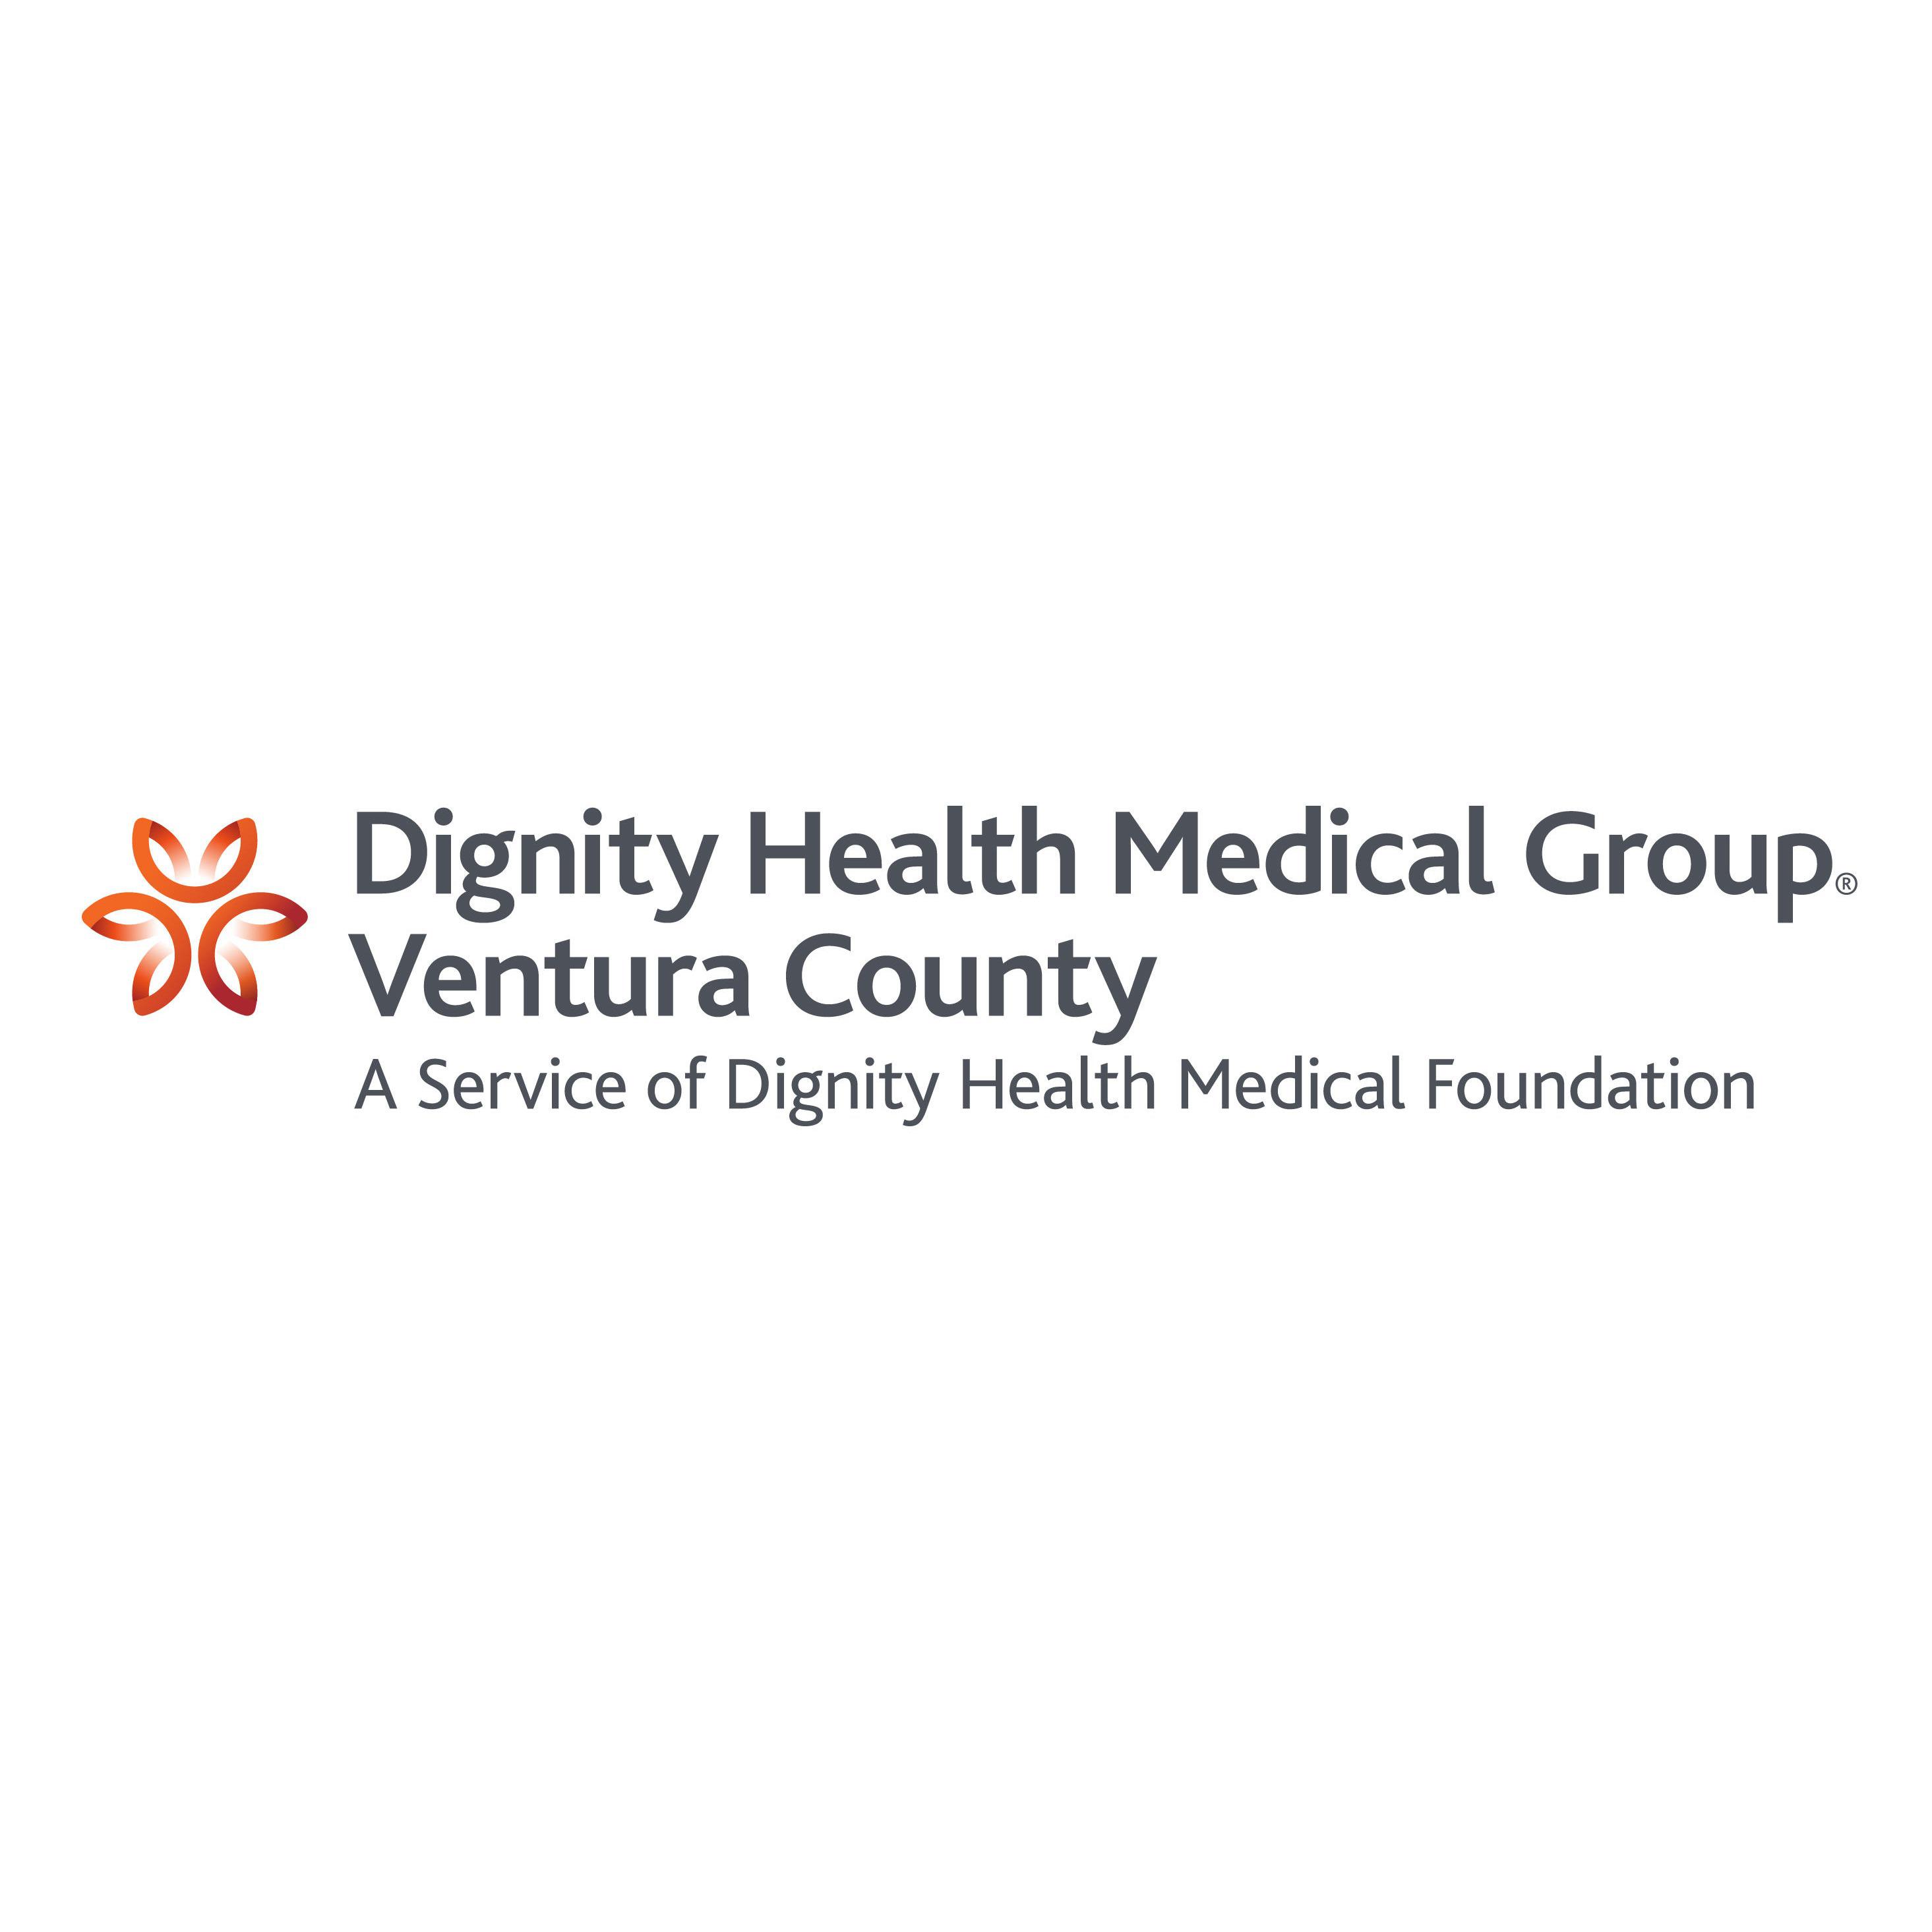 Dignity Health Medical Group - Ventura County (internal medicine and pediatrics)